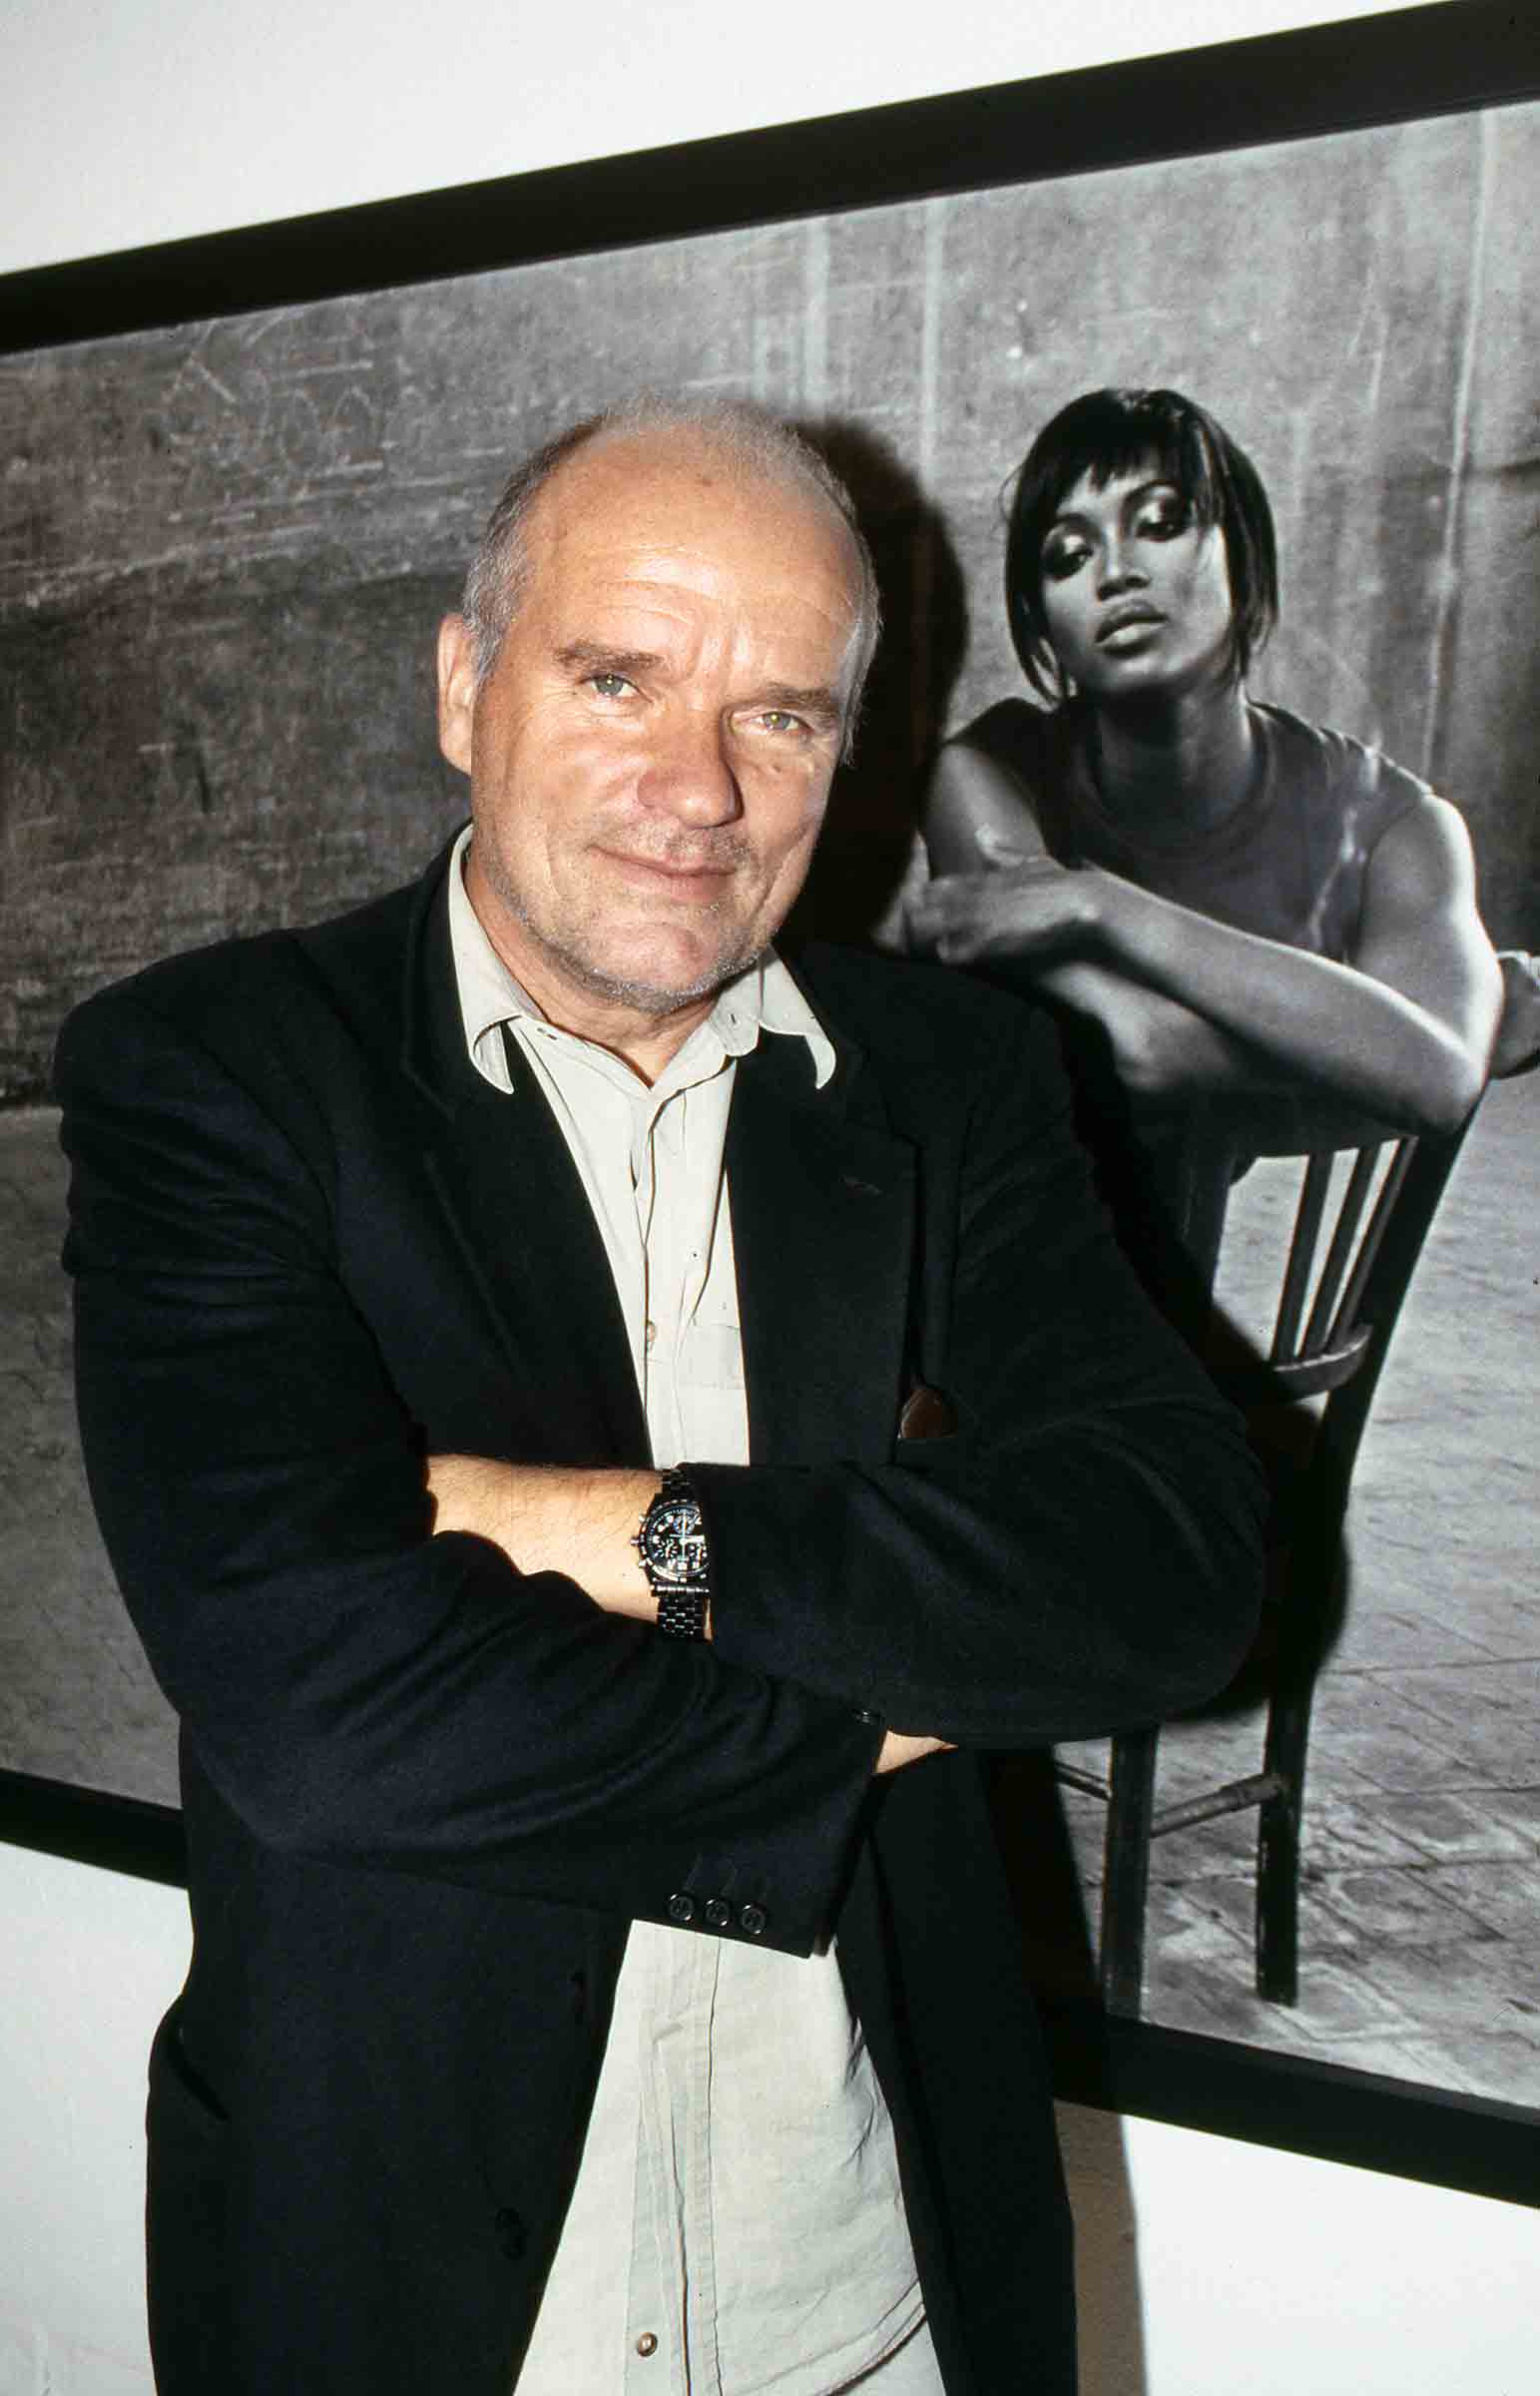 Peter Lindbergh attends his exhibition at Galleria Carla Sozzani in Milan in 2000